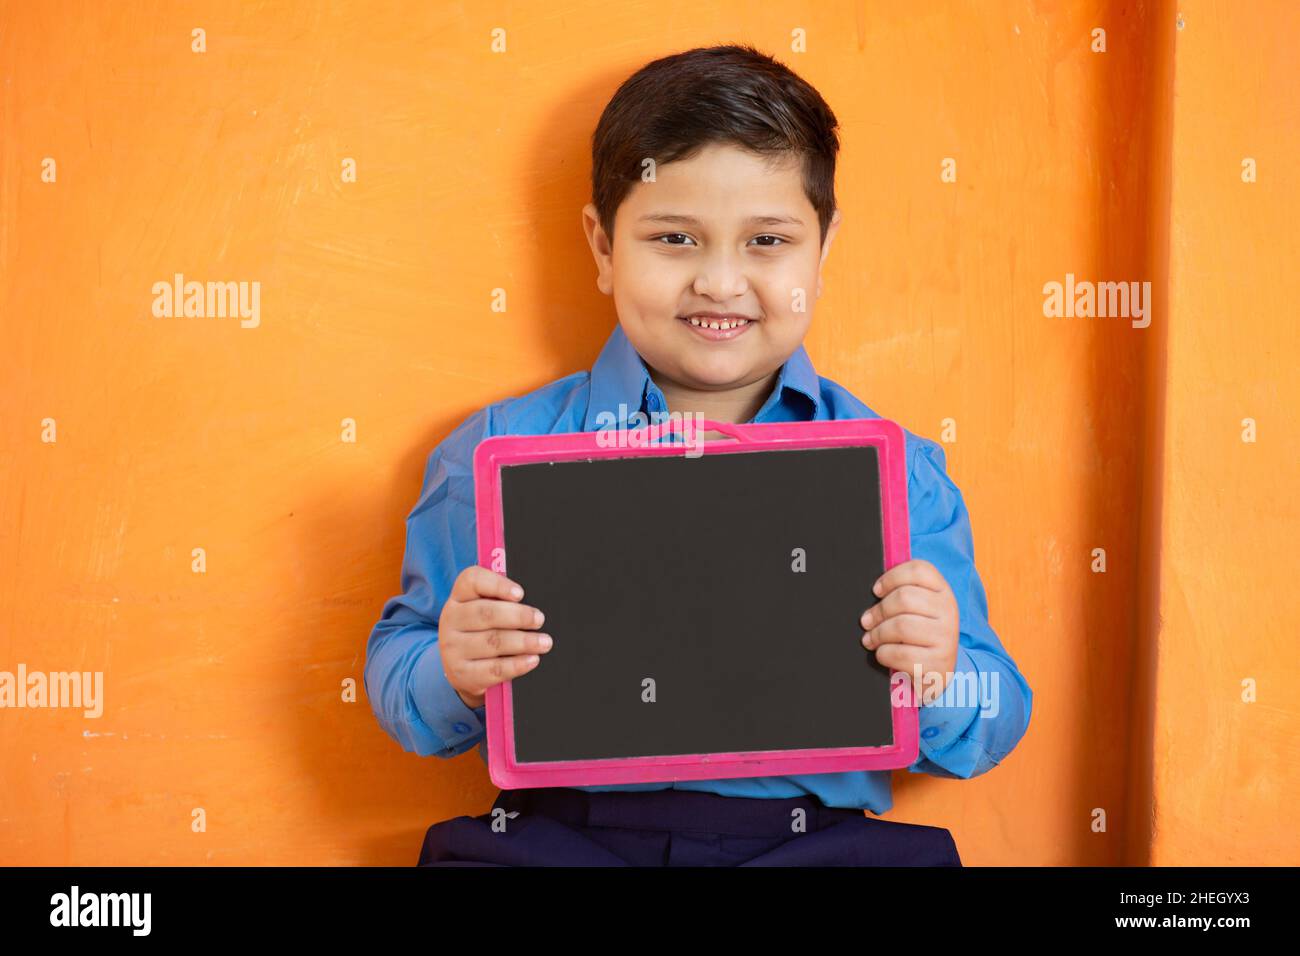 Portrait of happy cute little indian boy in school uniform holding blank slate against orange background, Adorable elementary kid showing black board. Stock Photo